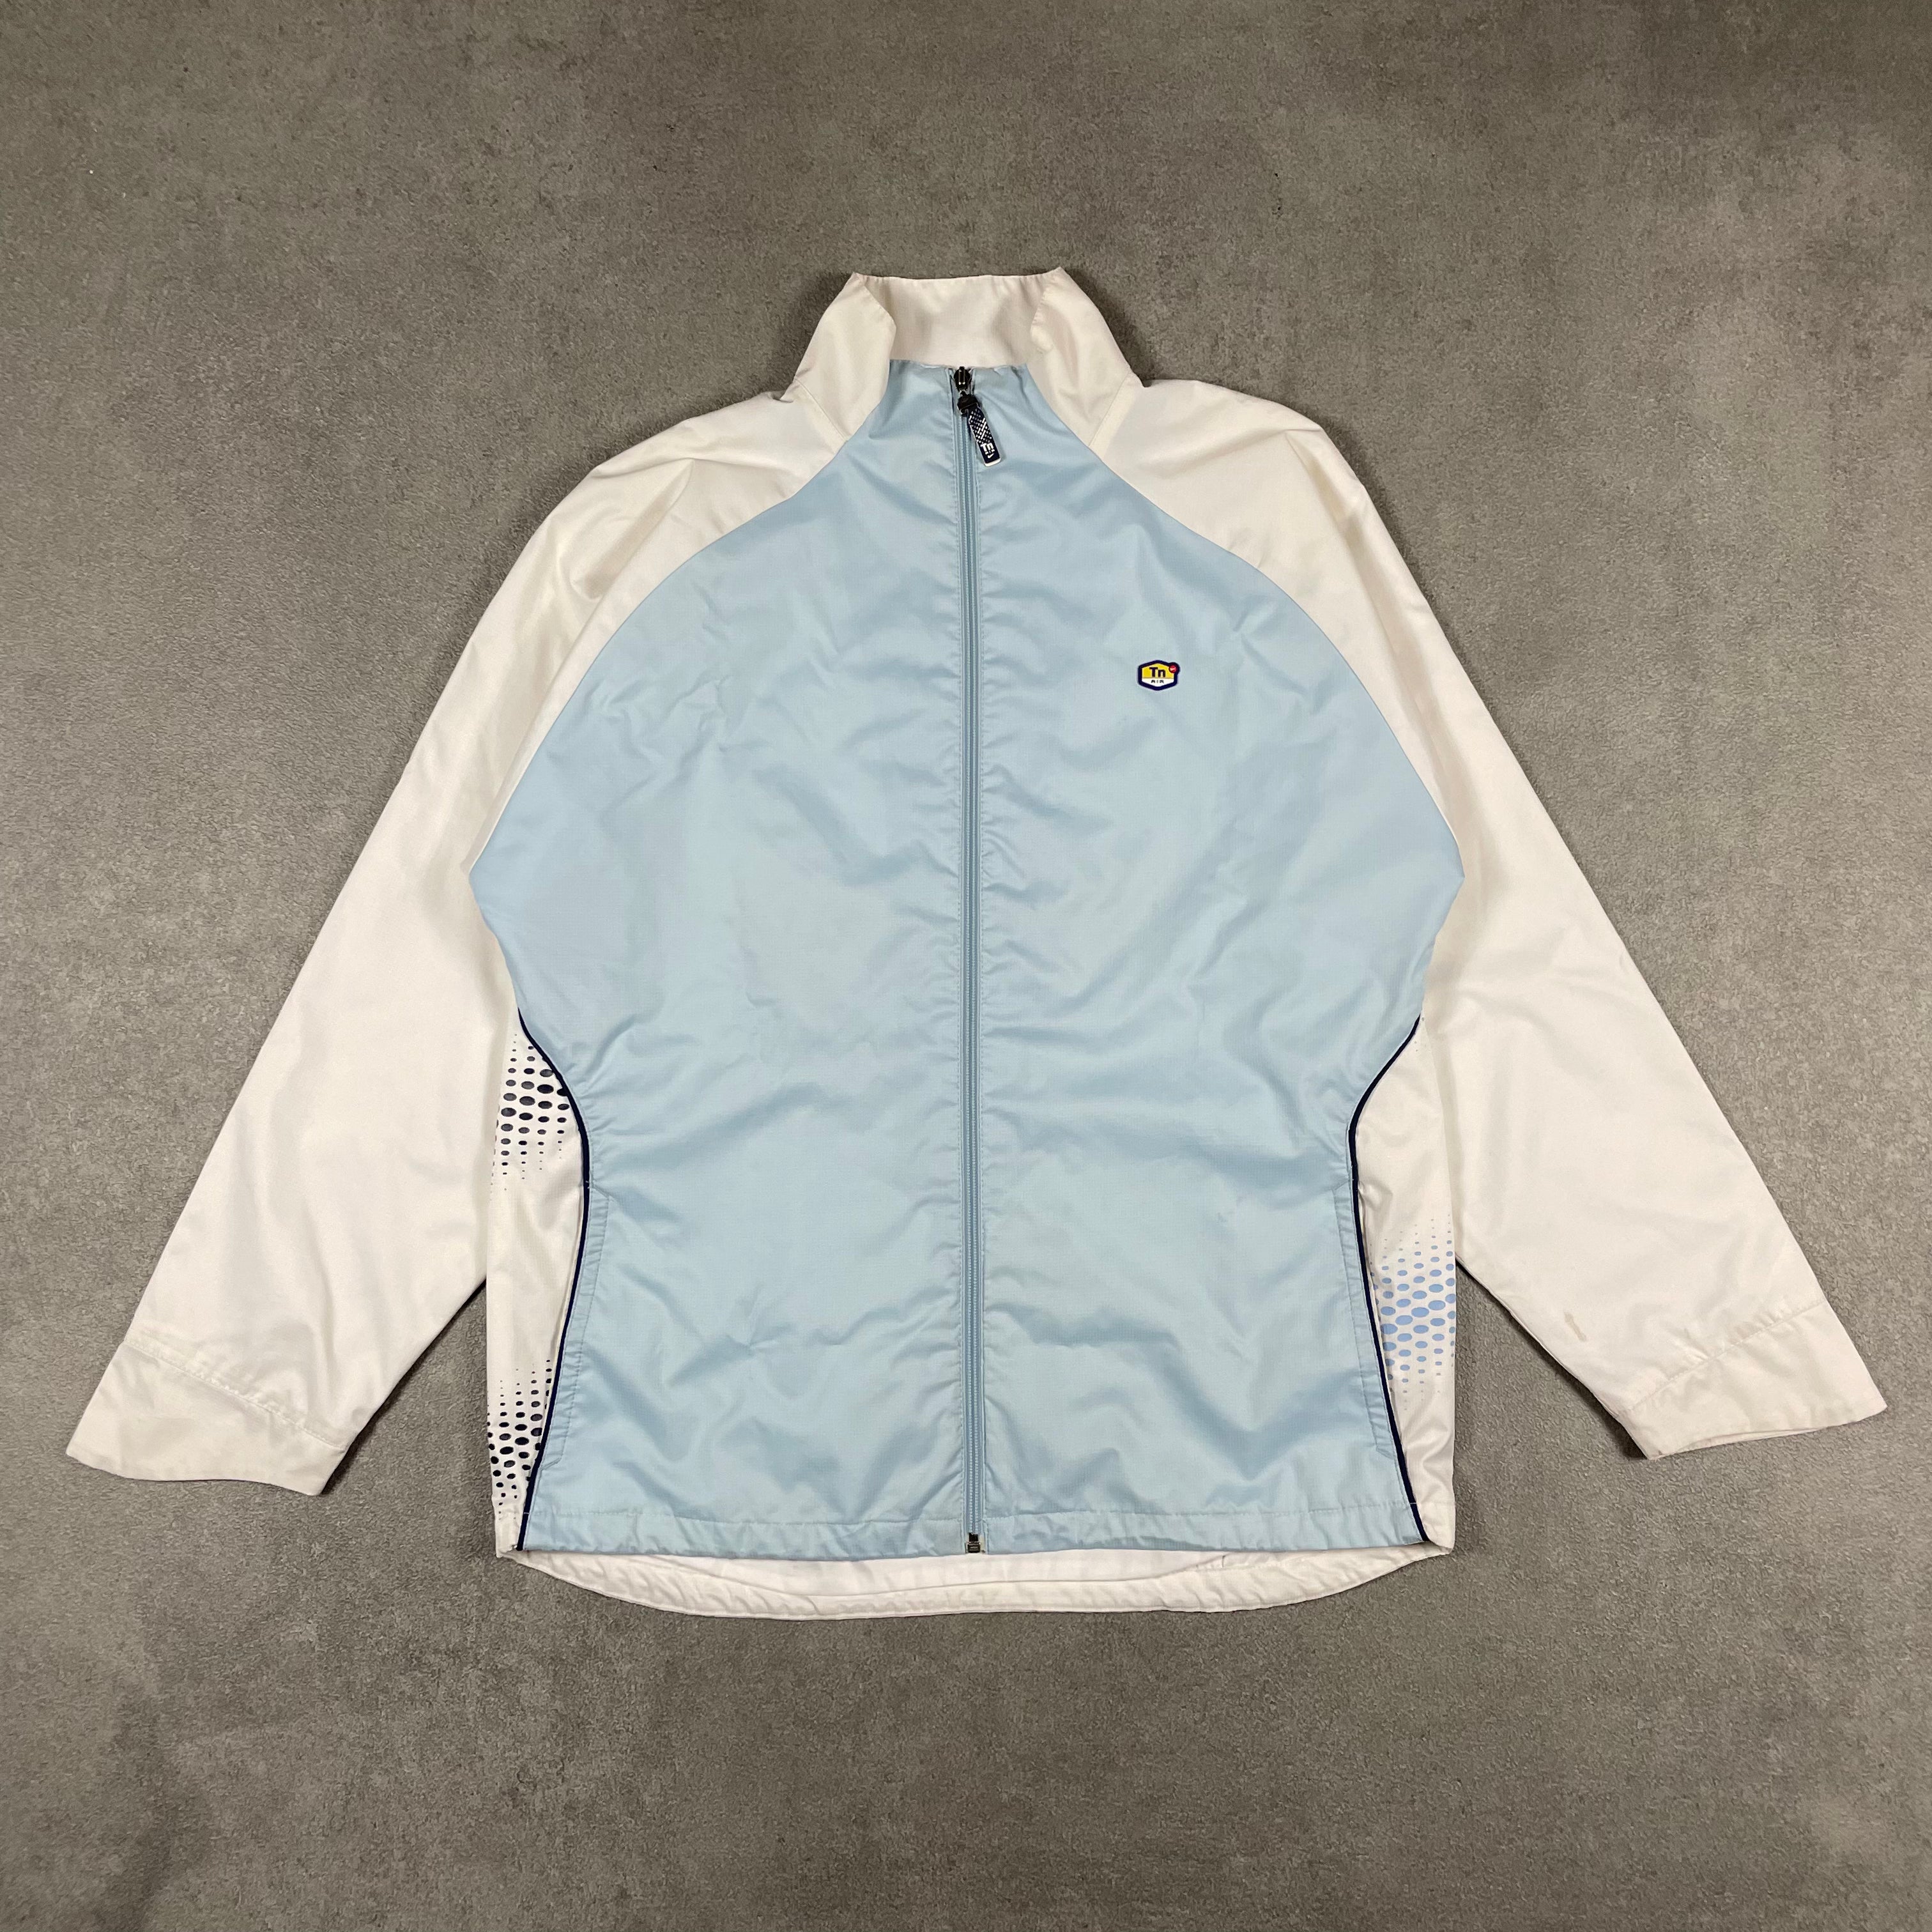 Nike Tn vintage Jacket (M) – LEGACY ARCHIVES